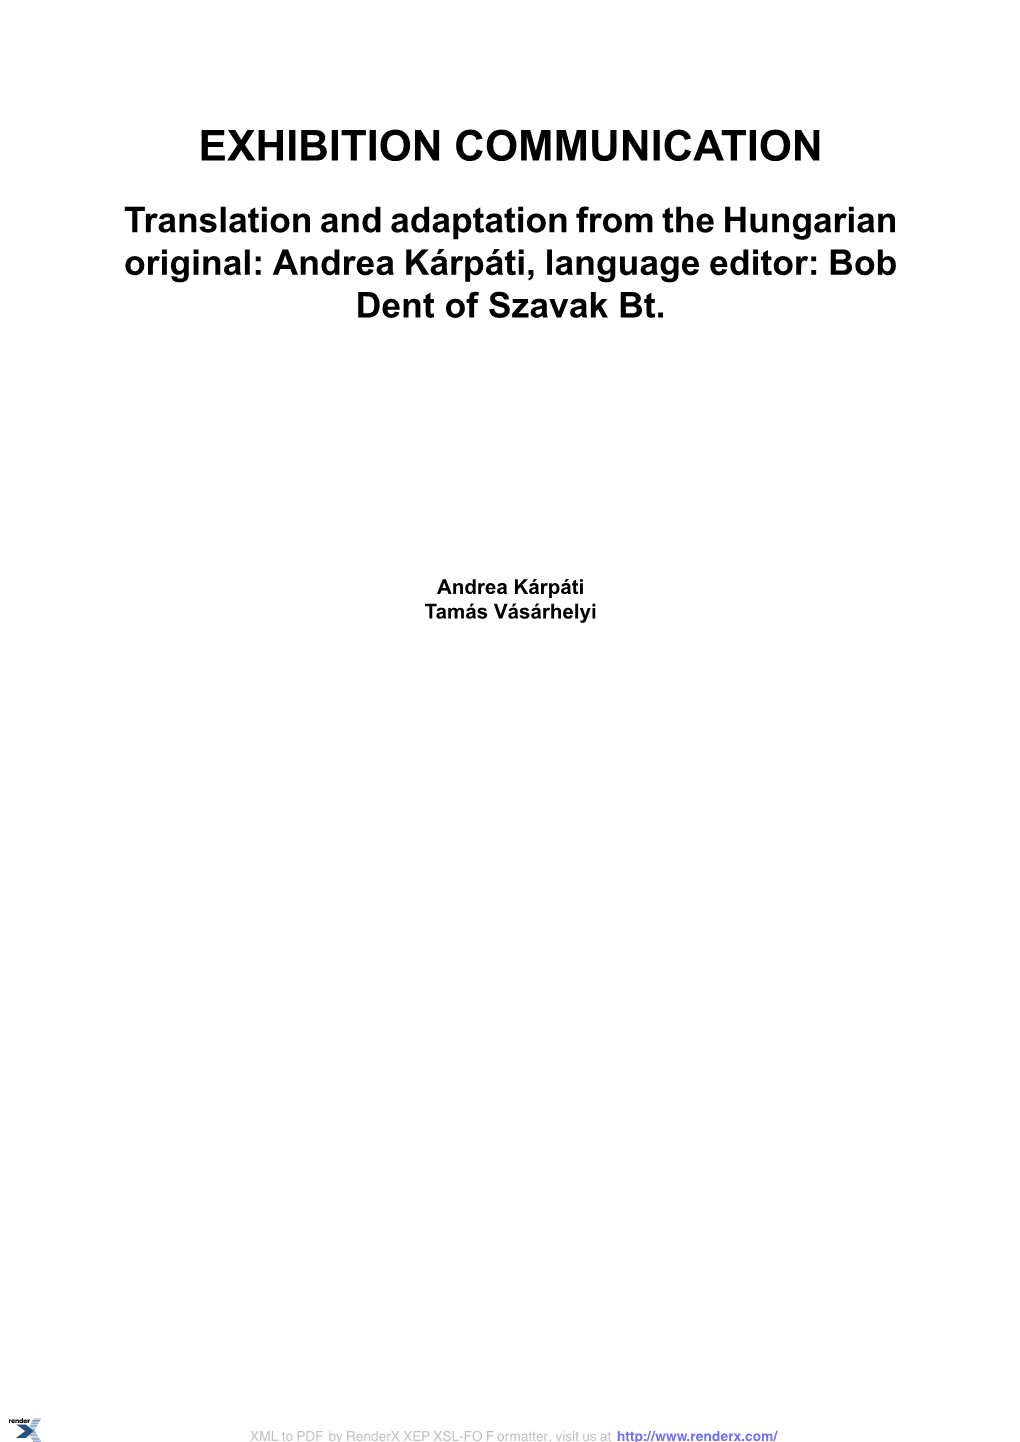 EXHIBITION COMMUNICATION Translation and Adaptation from the Hungarian Original: Andrea Kárpáti, Language Editor: Bob Dent of Szavak Bt